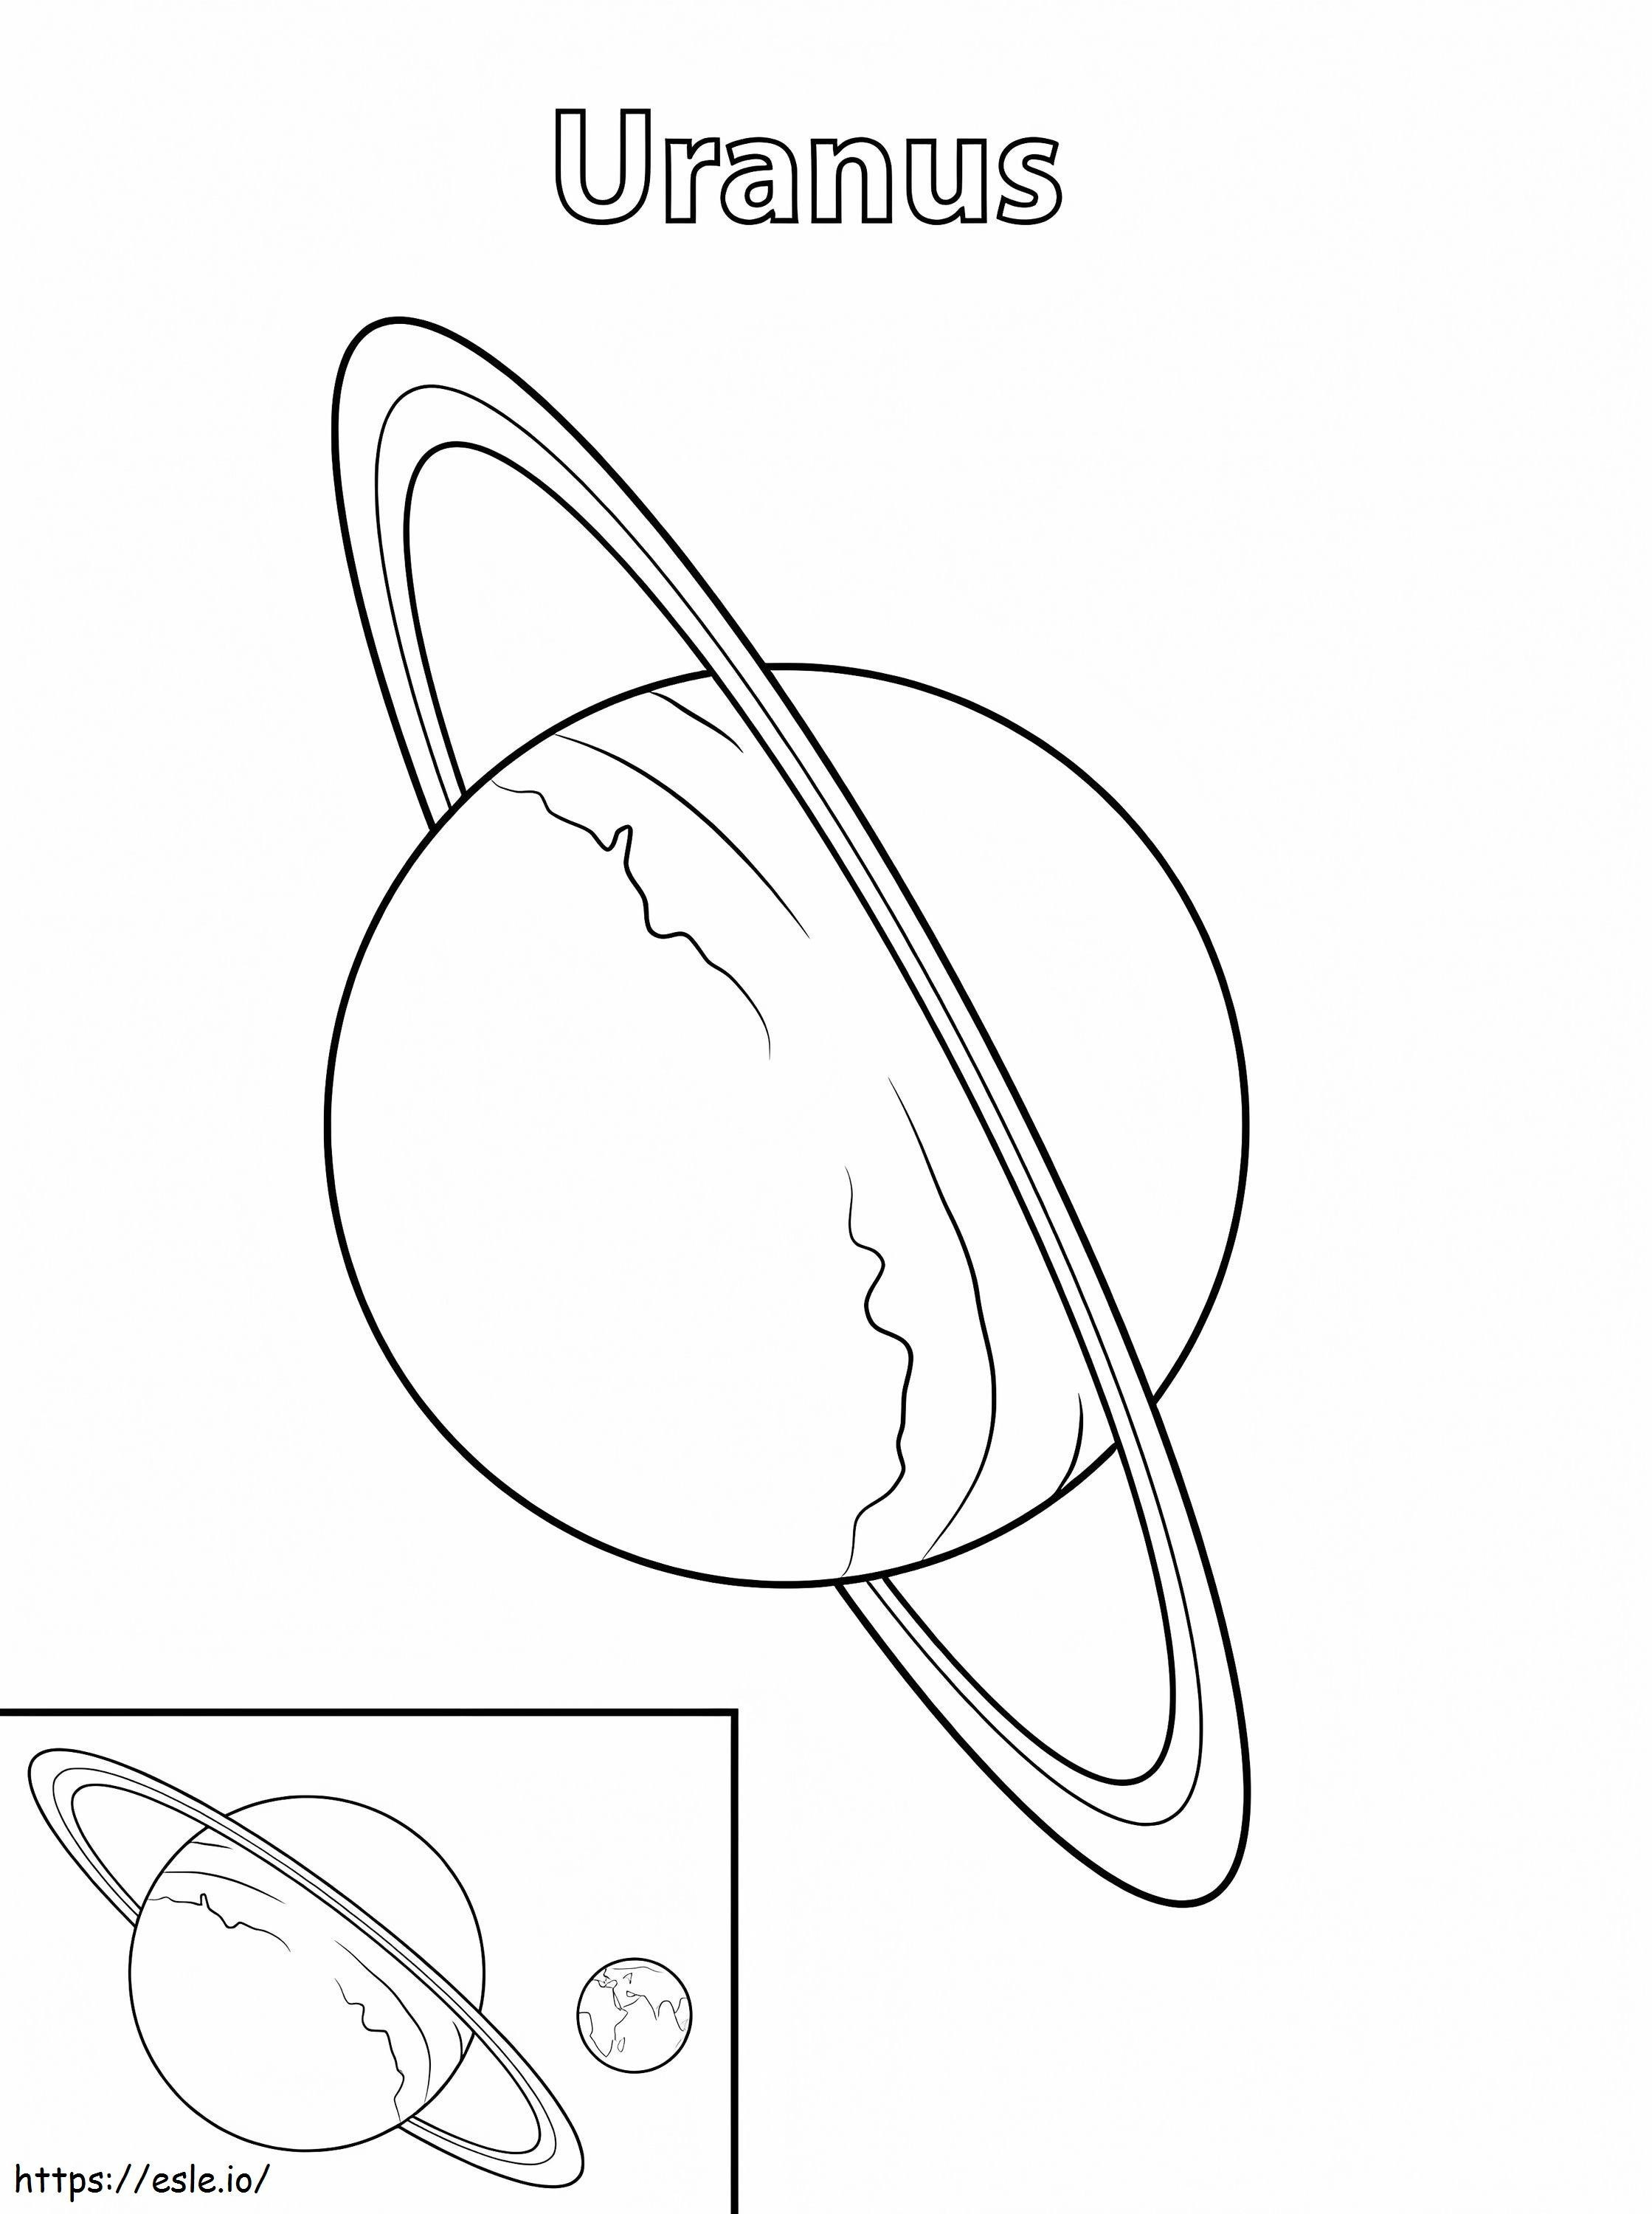 Planeta Uran kolorowanka